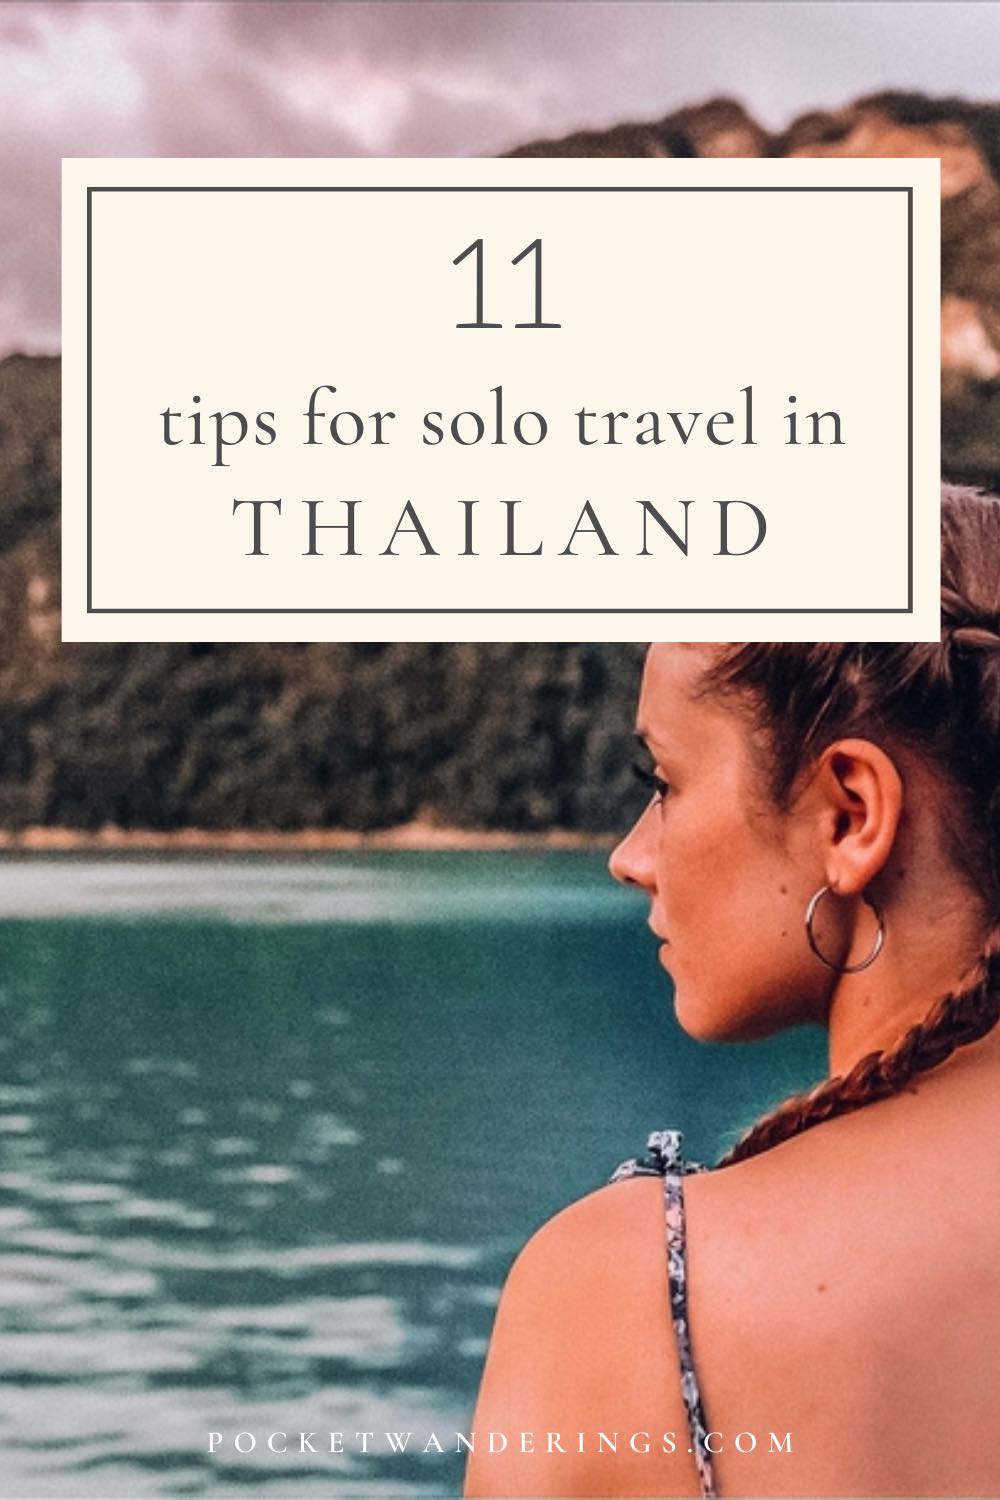 solo travel to thailand reddit